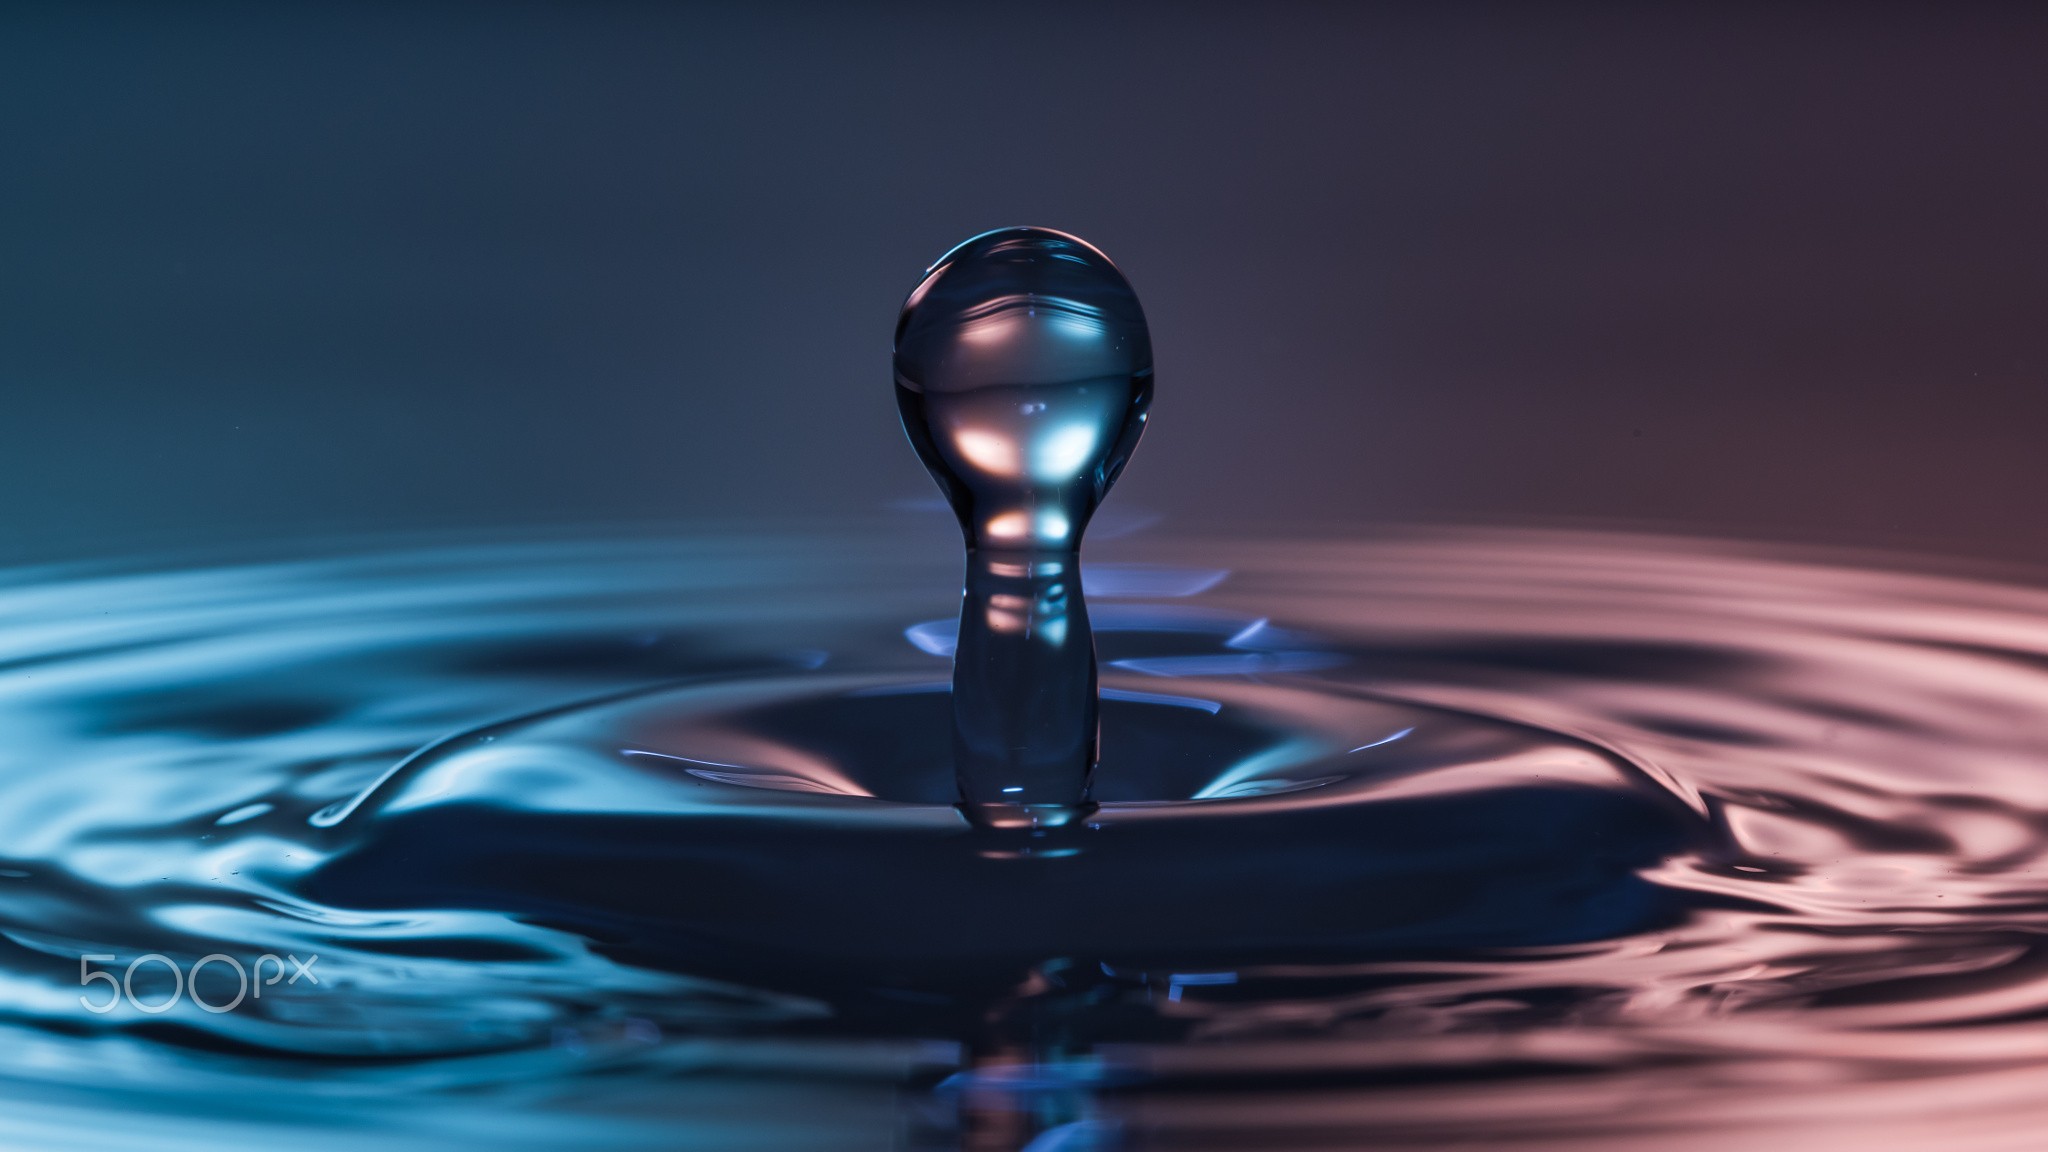 General 2048x1152 liquid 500px water water ripples water drops watermarked